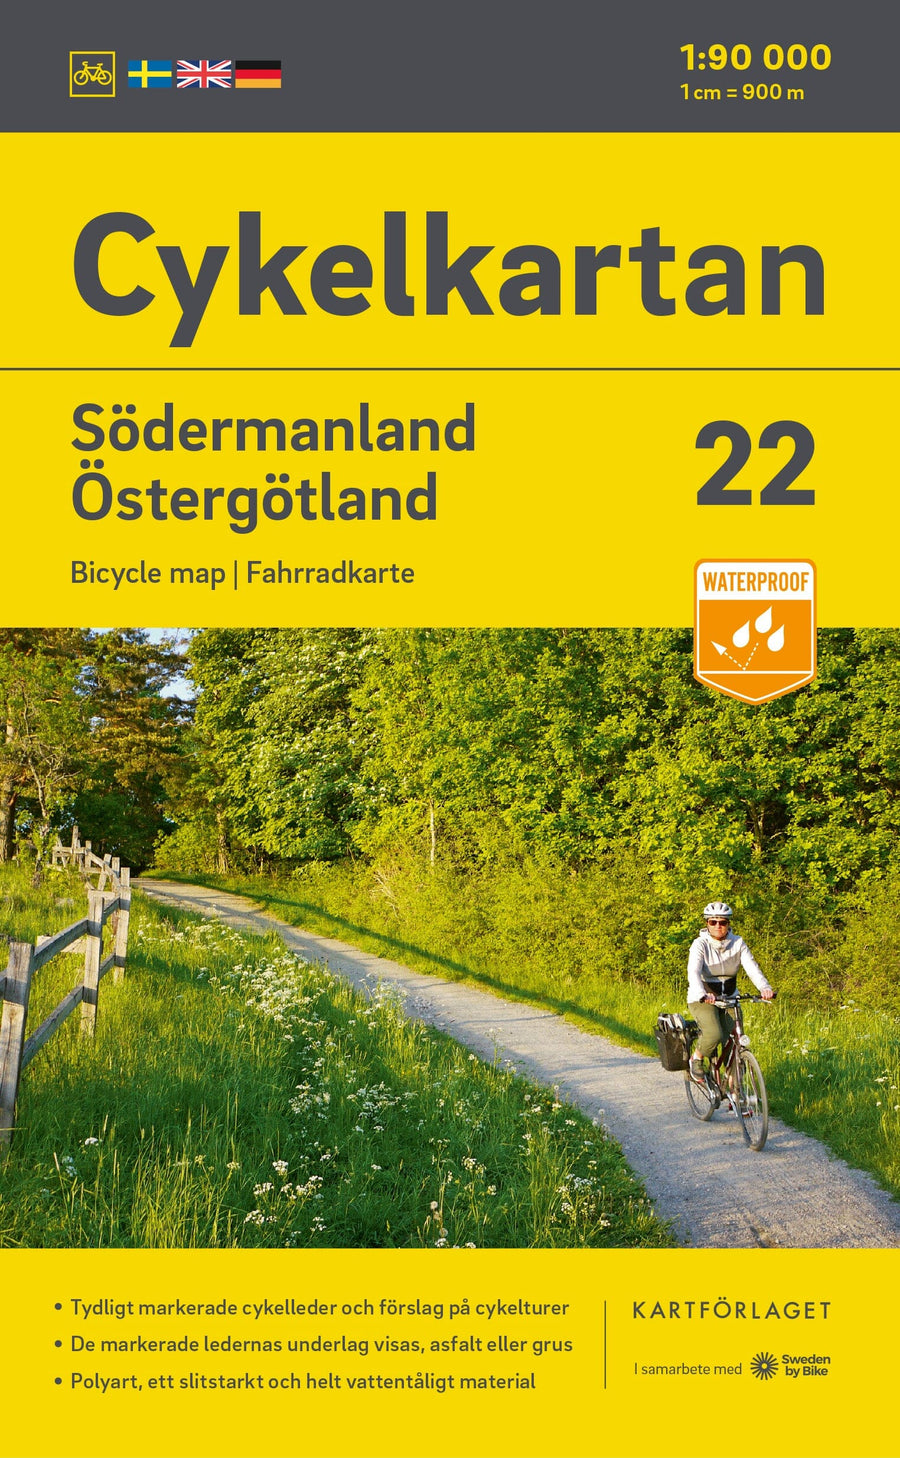 Carte cycliste n° 22 - Södermanland / Östergötland (Suède) | Norstedts carte pliée Norstedts 